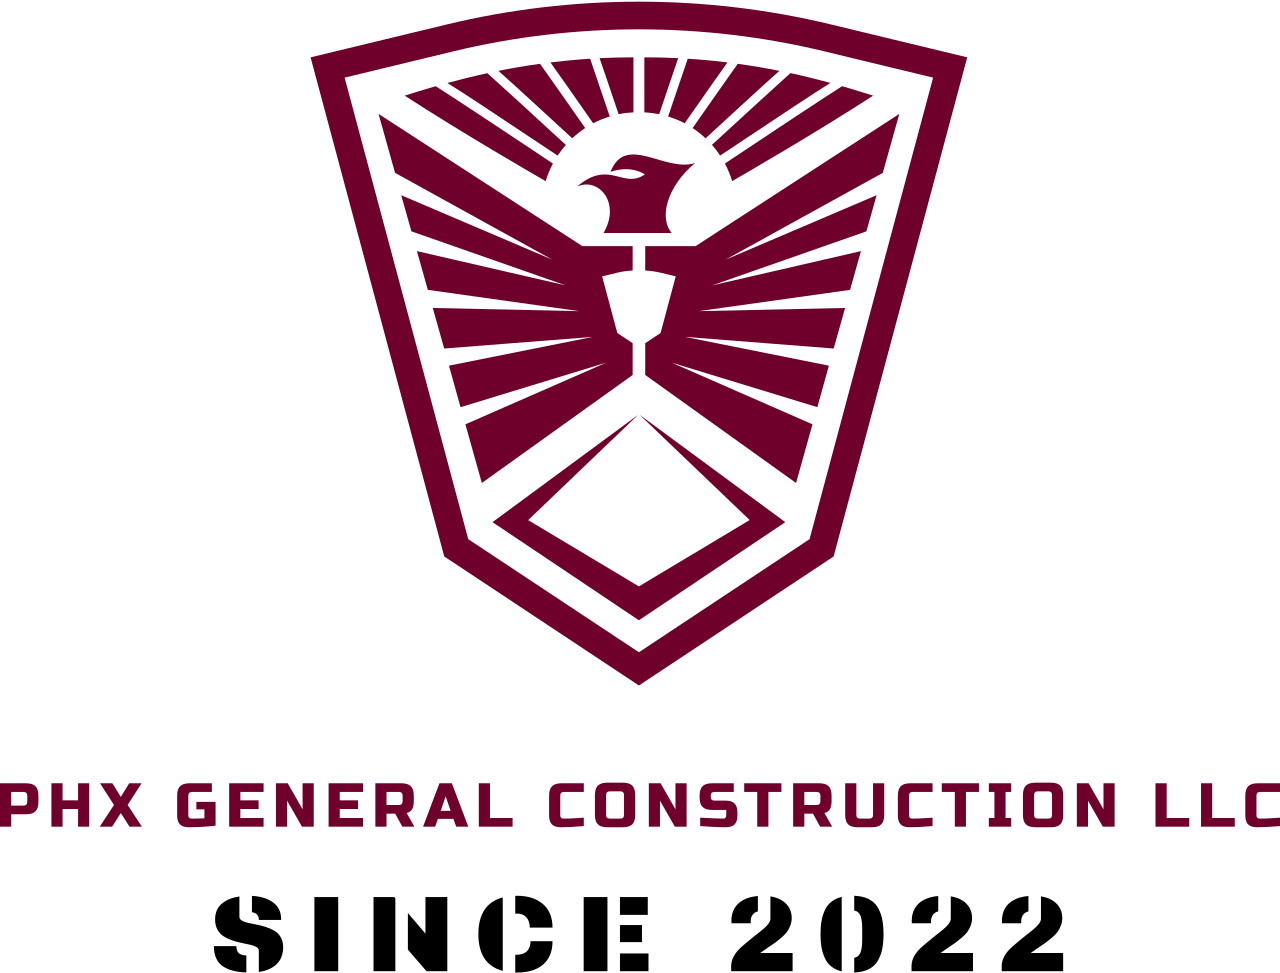 Phx general construction 's logo